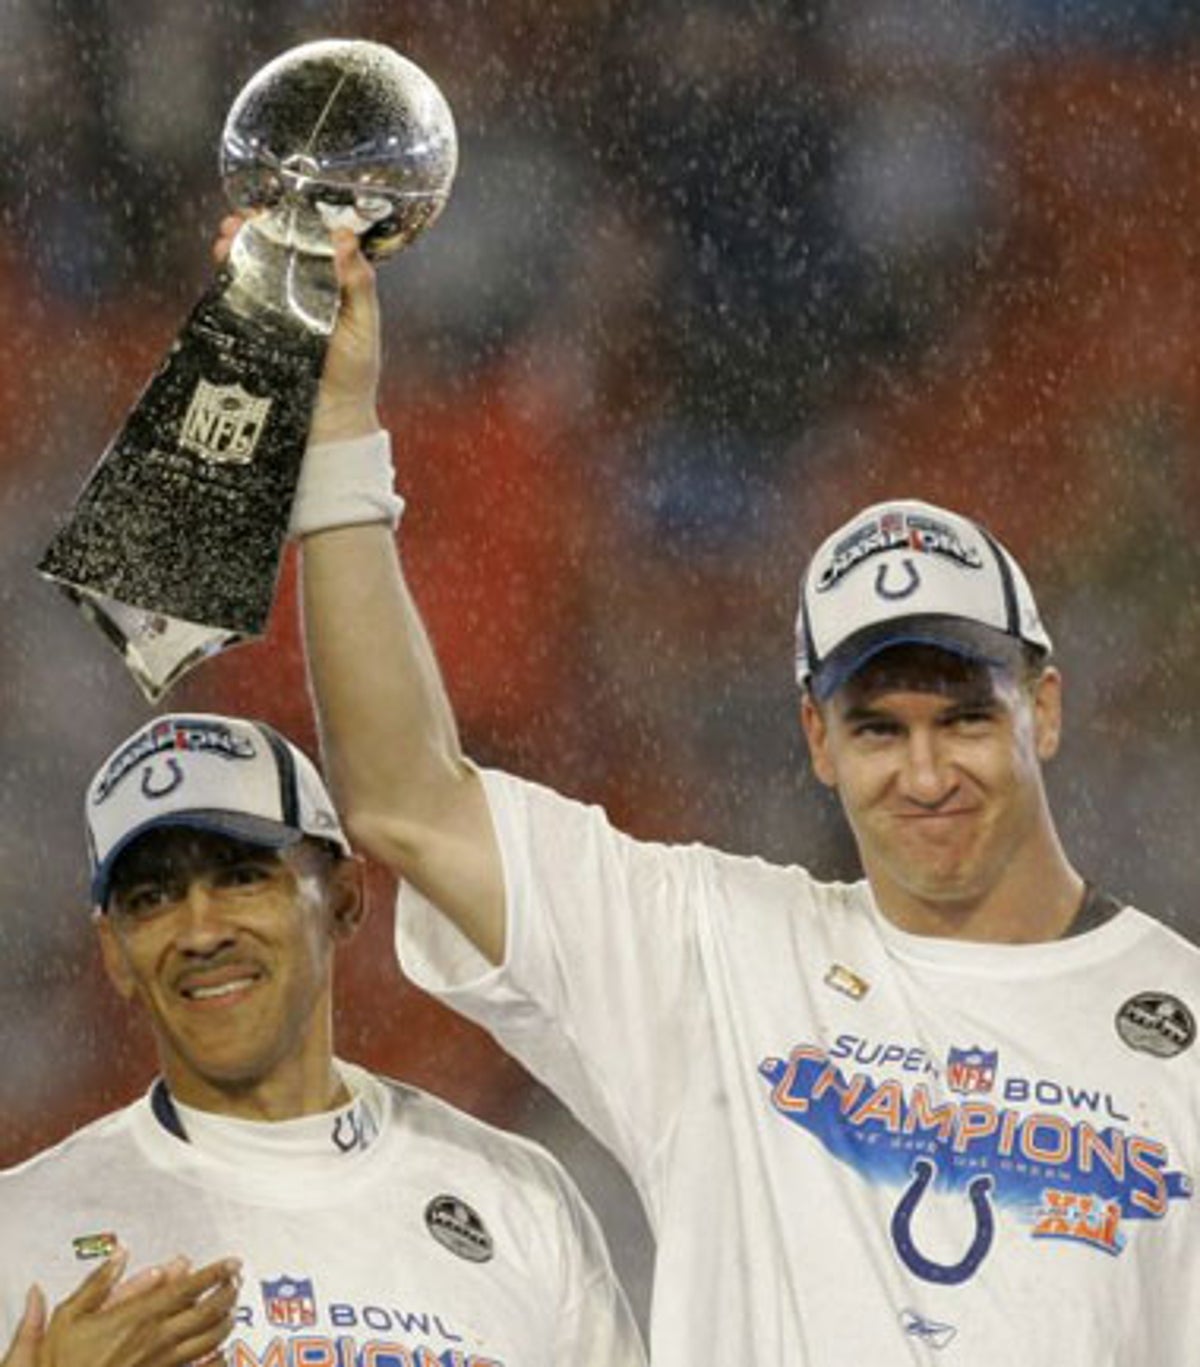 Super Bowl XLI: Peyton Manning finally gets his ring as Colts beat